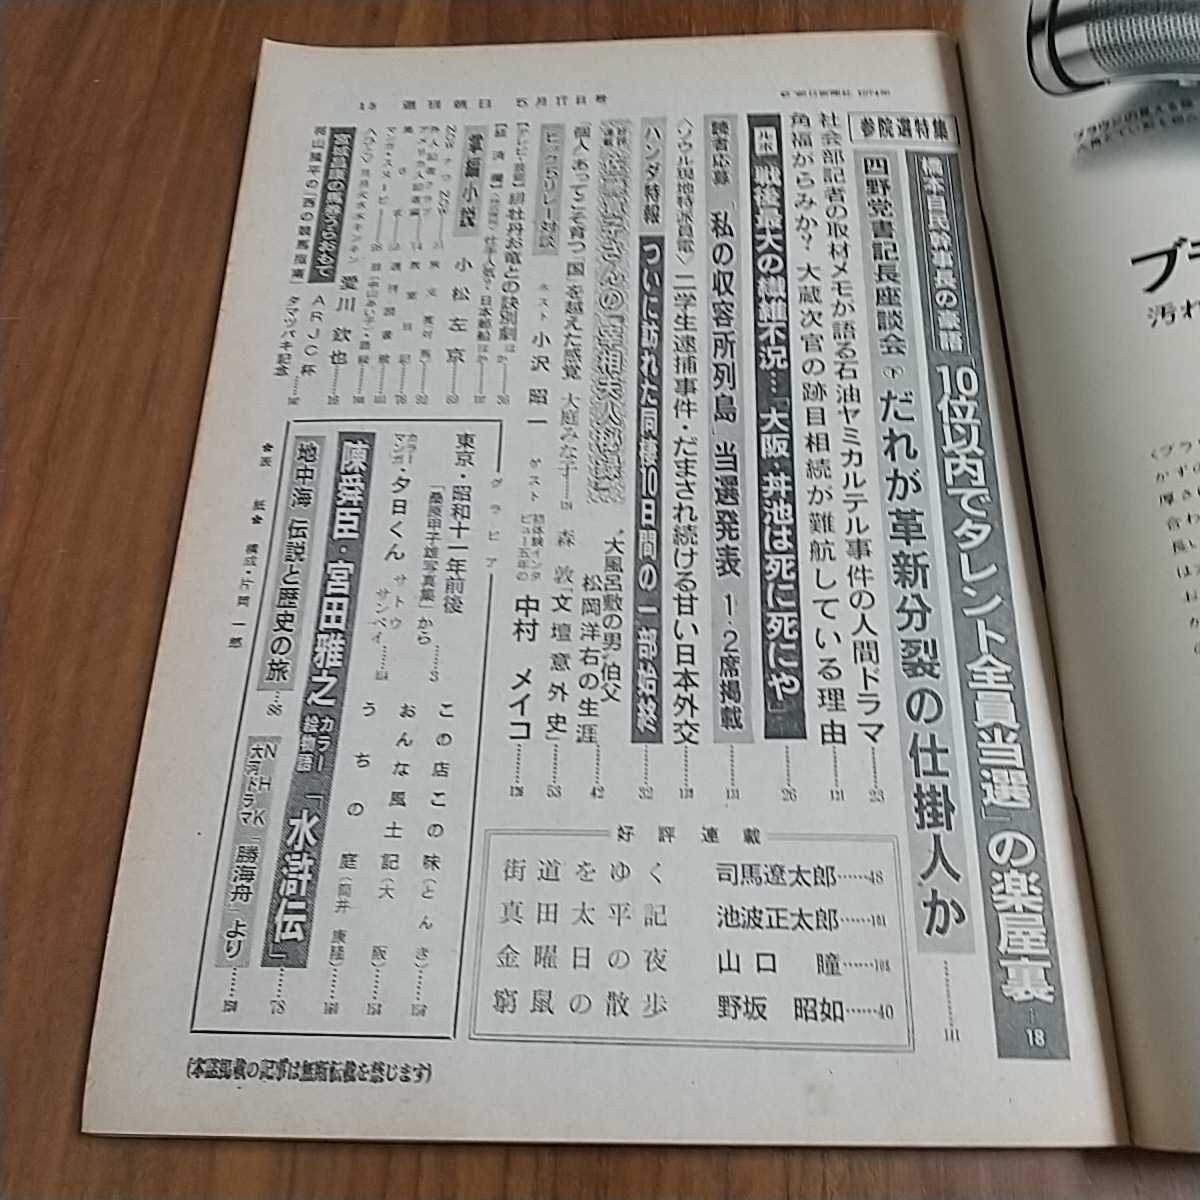  Weekly Asahi 1974 Showa era 49 year 5/17 temple island original .3 hour. you wistaria original . Tokyo Showa era 11 year rom and rear (before and after) love river .. Panda . sea boat Tsutsui Yasutaka 